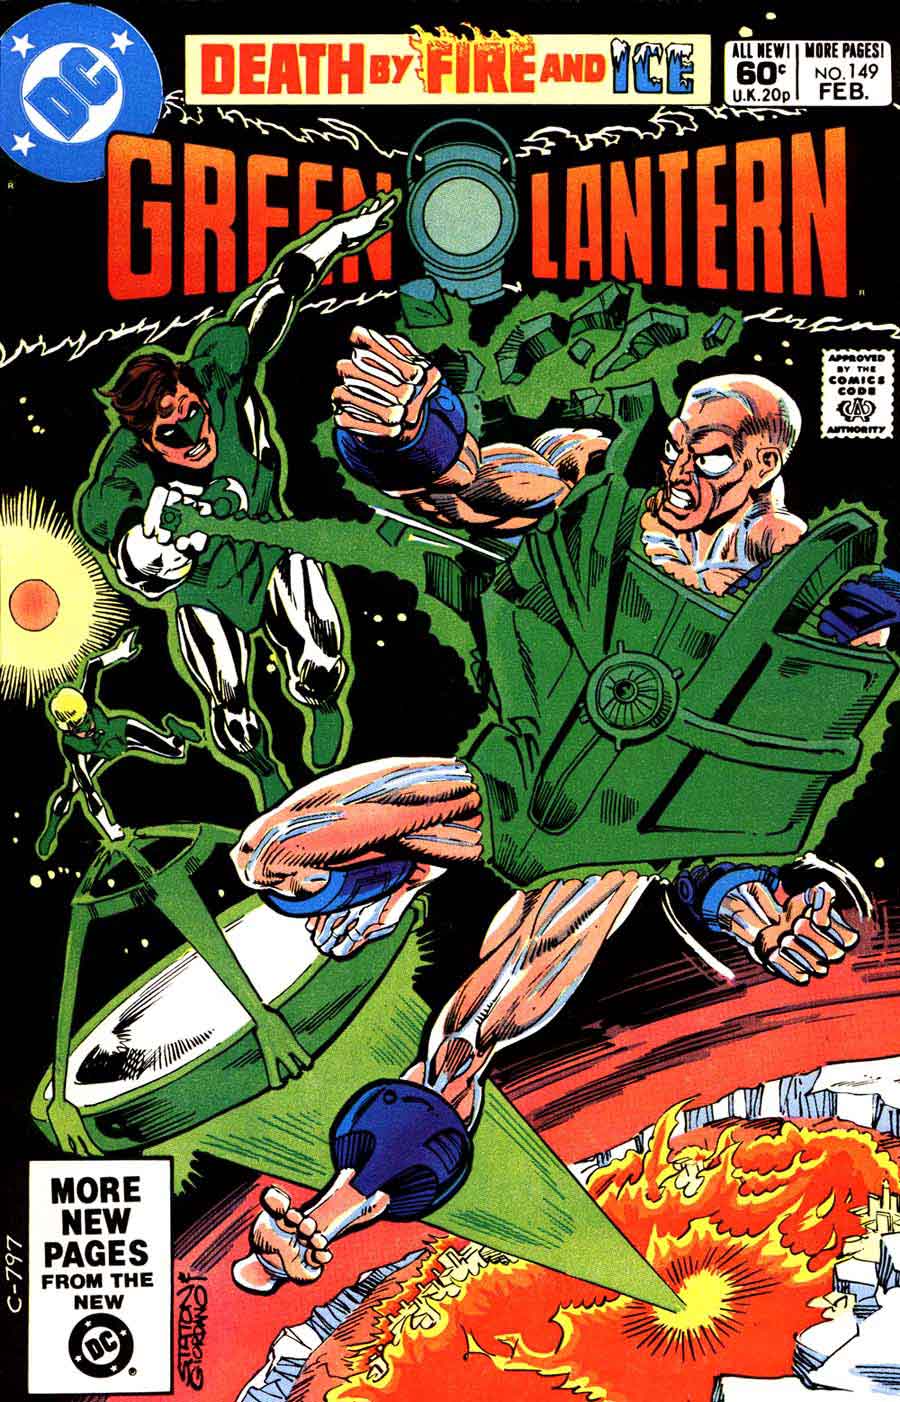 Green Lantern v2 #149 dc comic book cover art